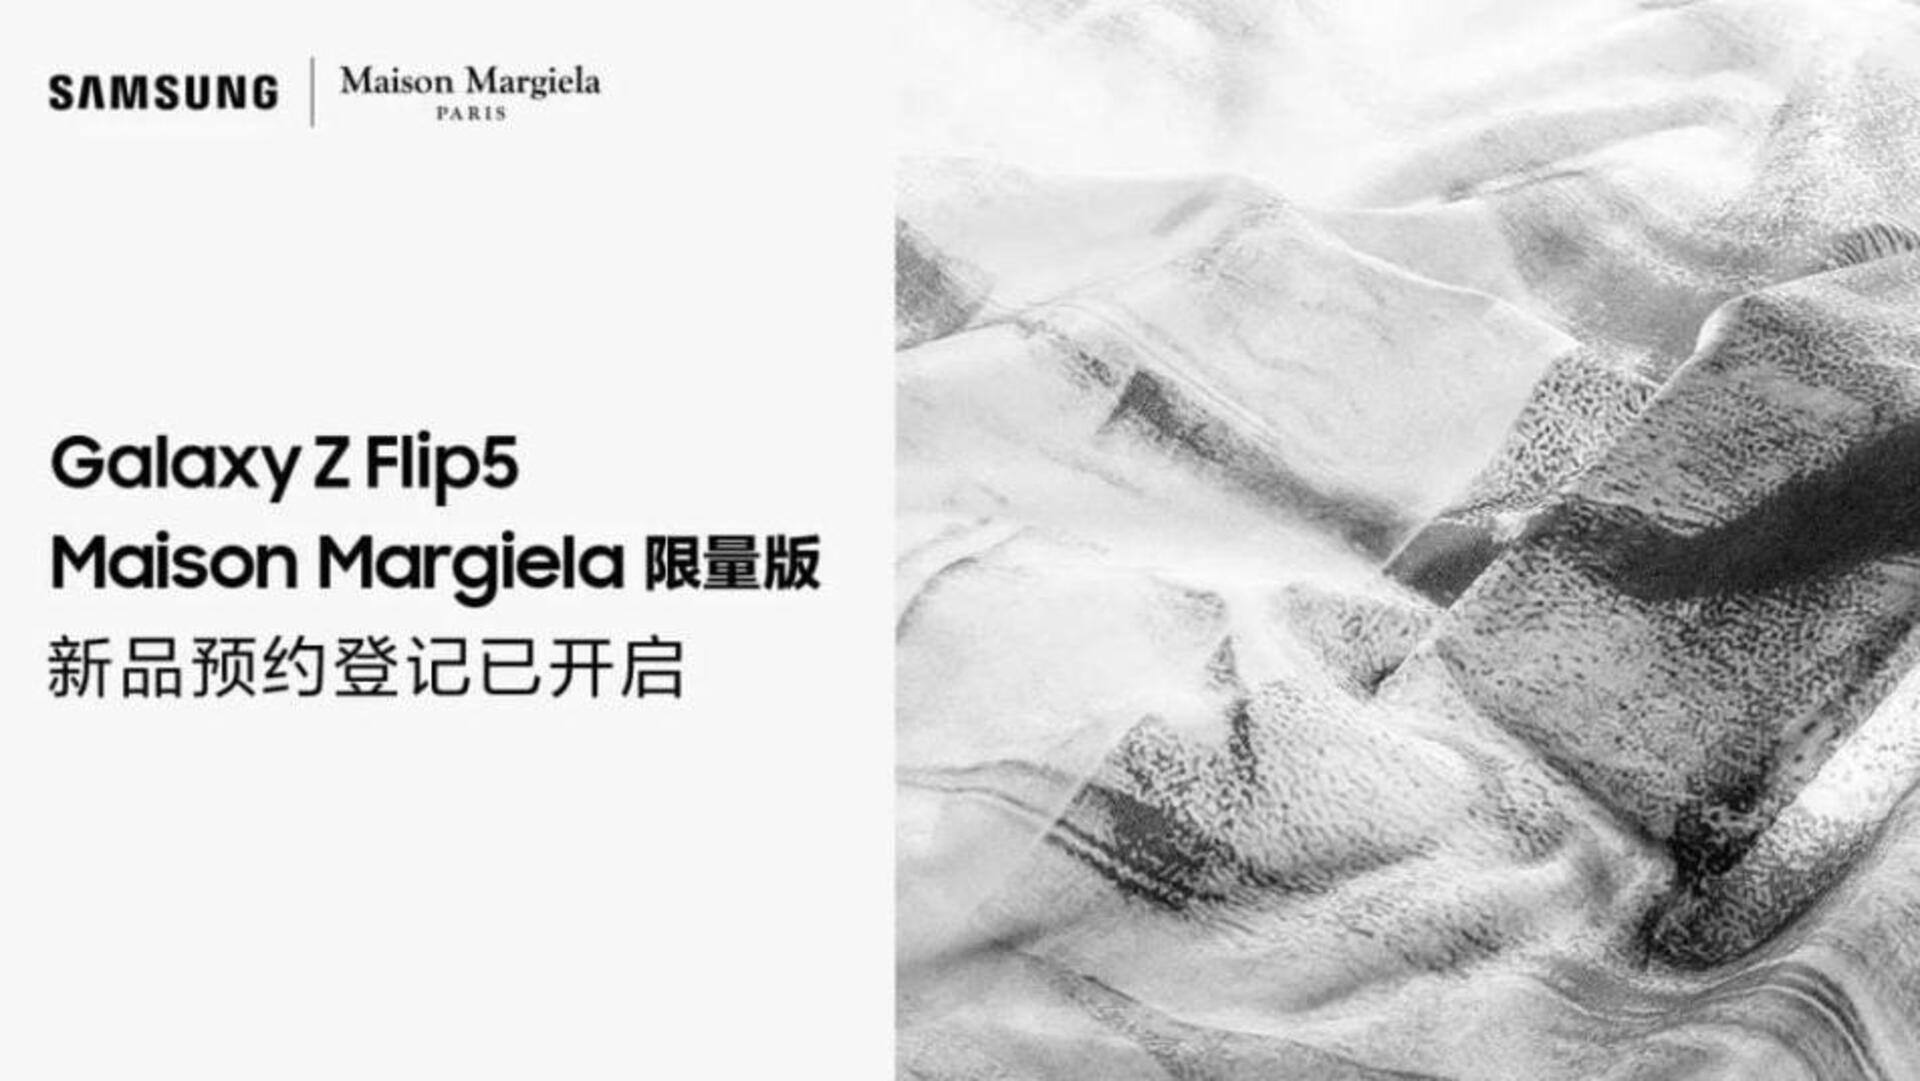 Samsung Galaxy Z Flip5 Maison Margiela Edition's bookings live